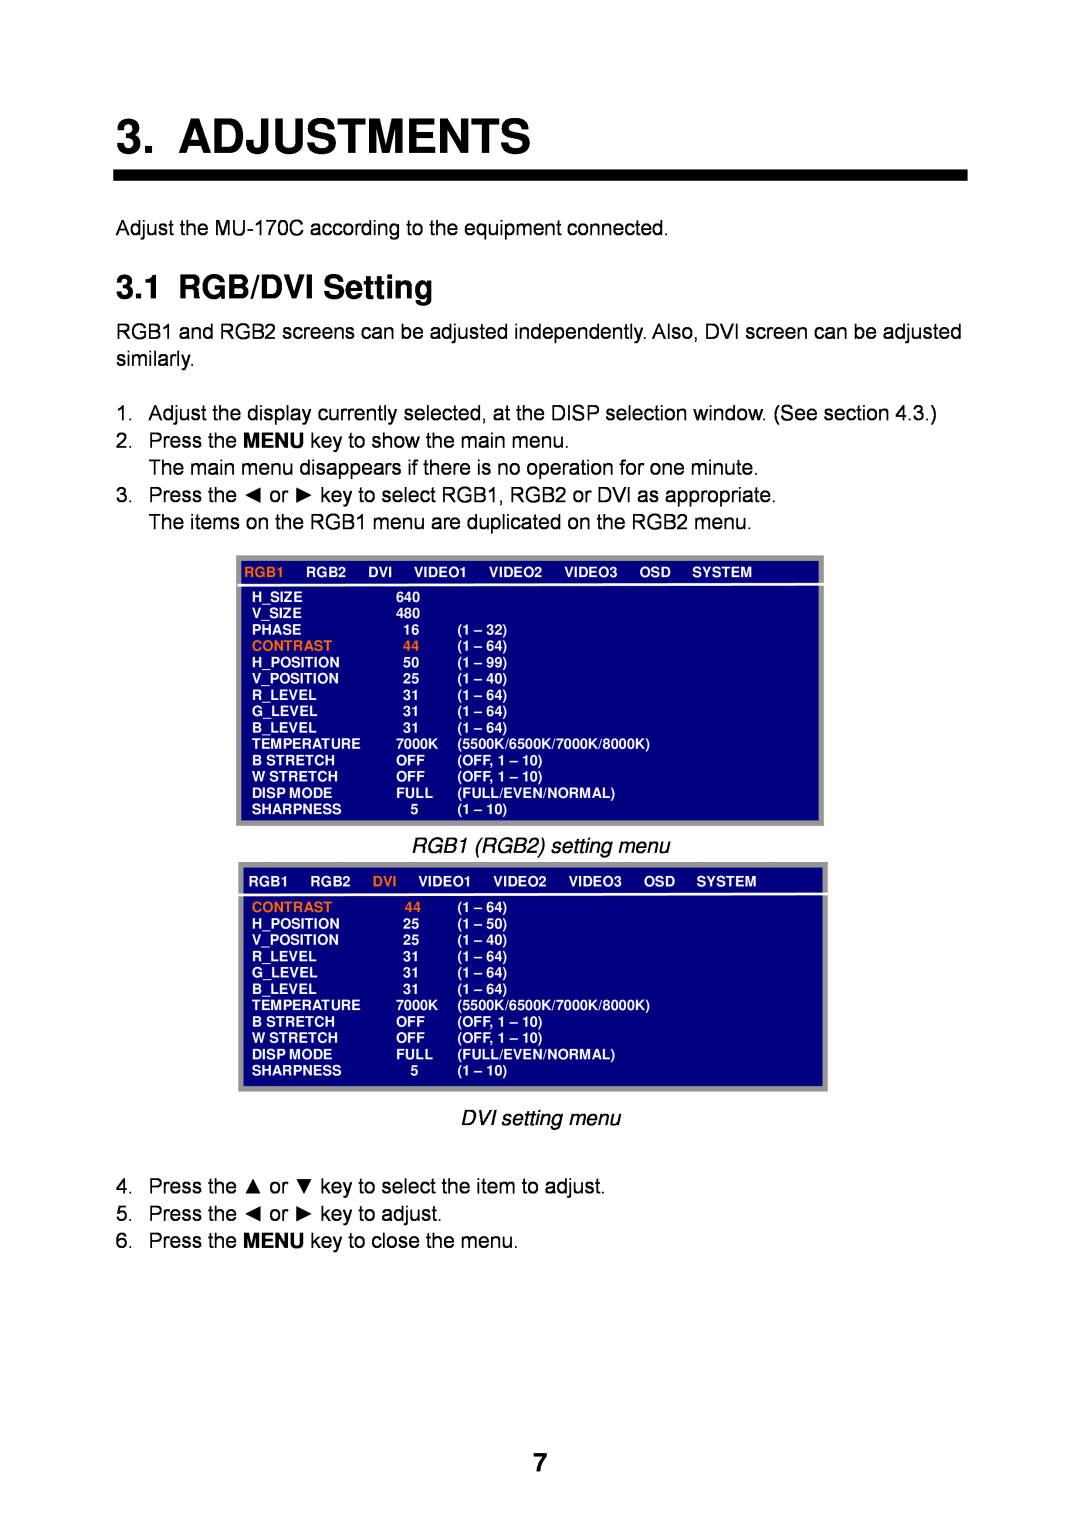 Furuno MU-170C manual Adjustments, 3.1 RGB/DVI Setting 